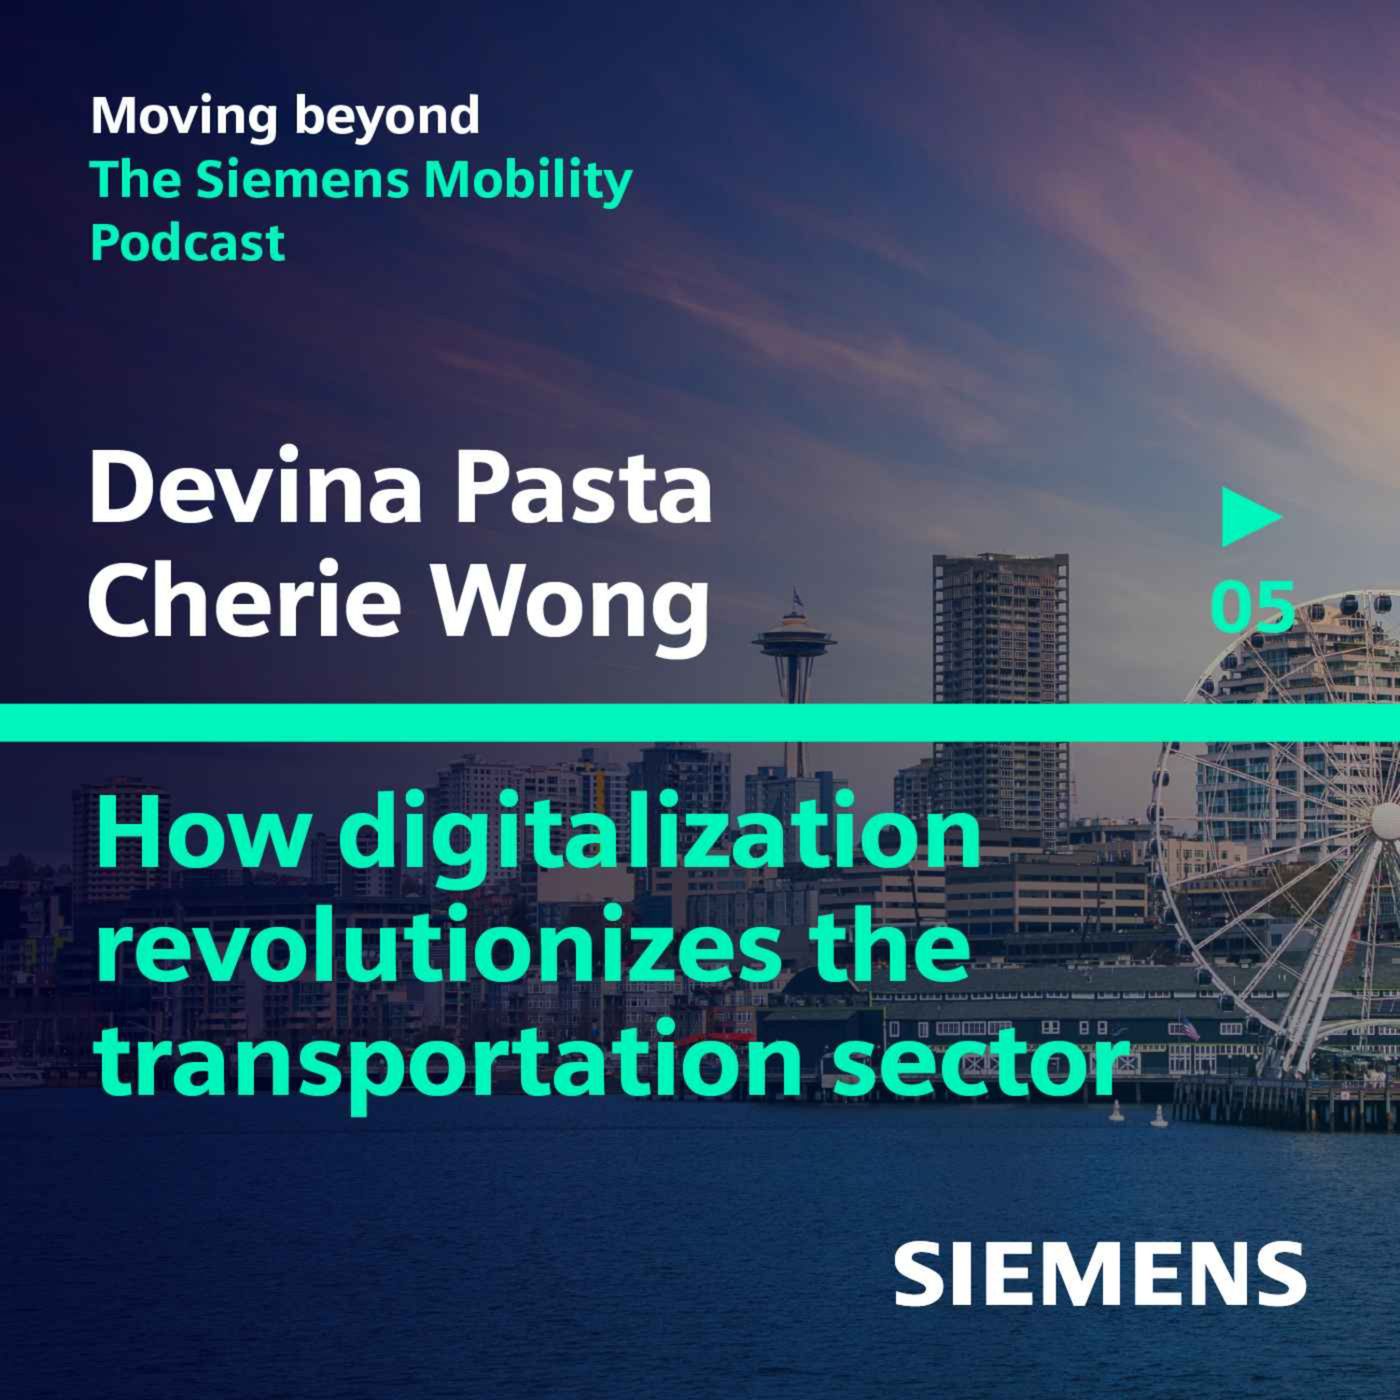 How digitalization revolutionizes the transportation sector